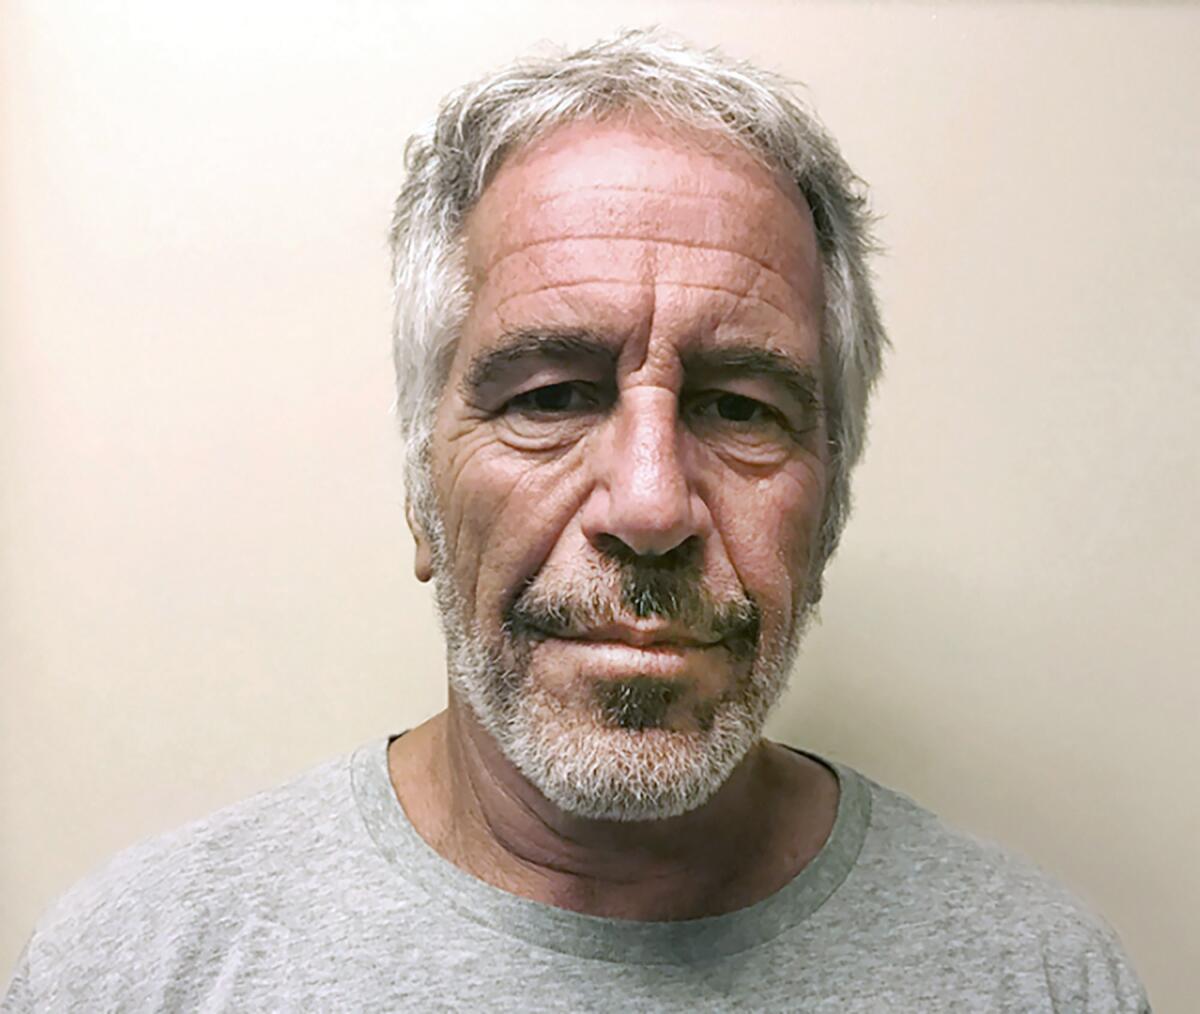 Jeffrey Epstein's mug shot from the New York State Sex Offender Registry